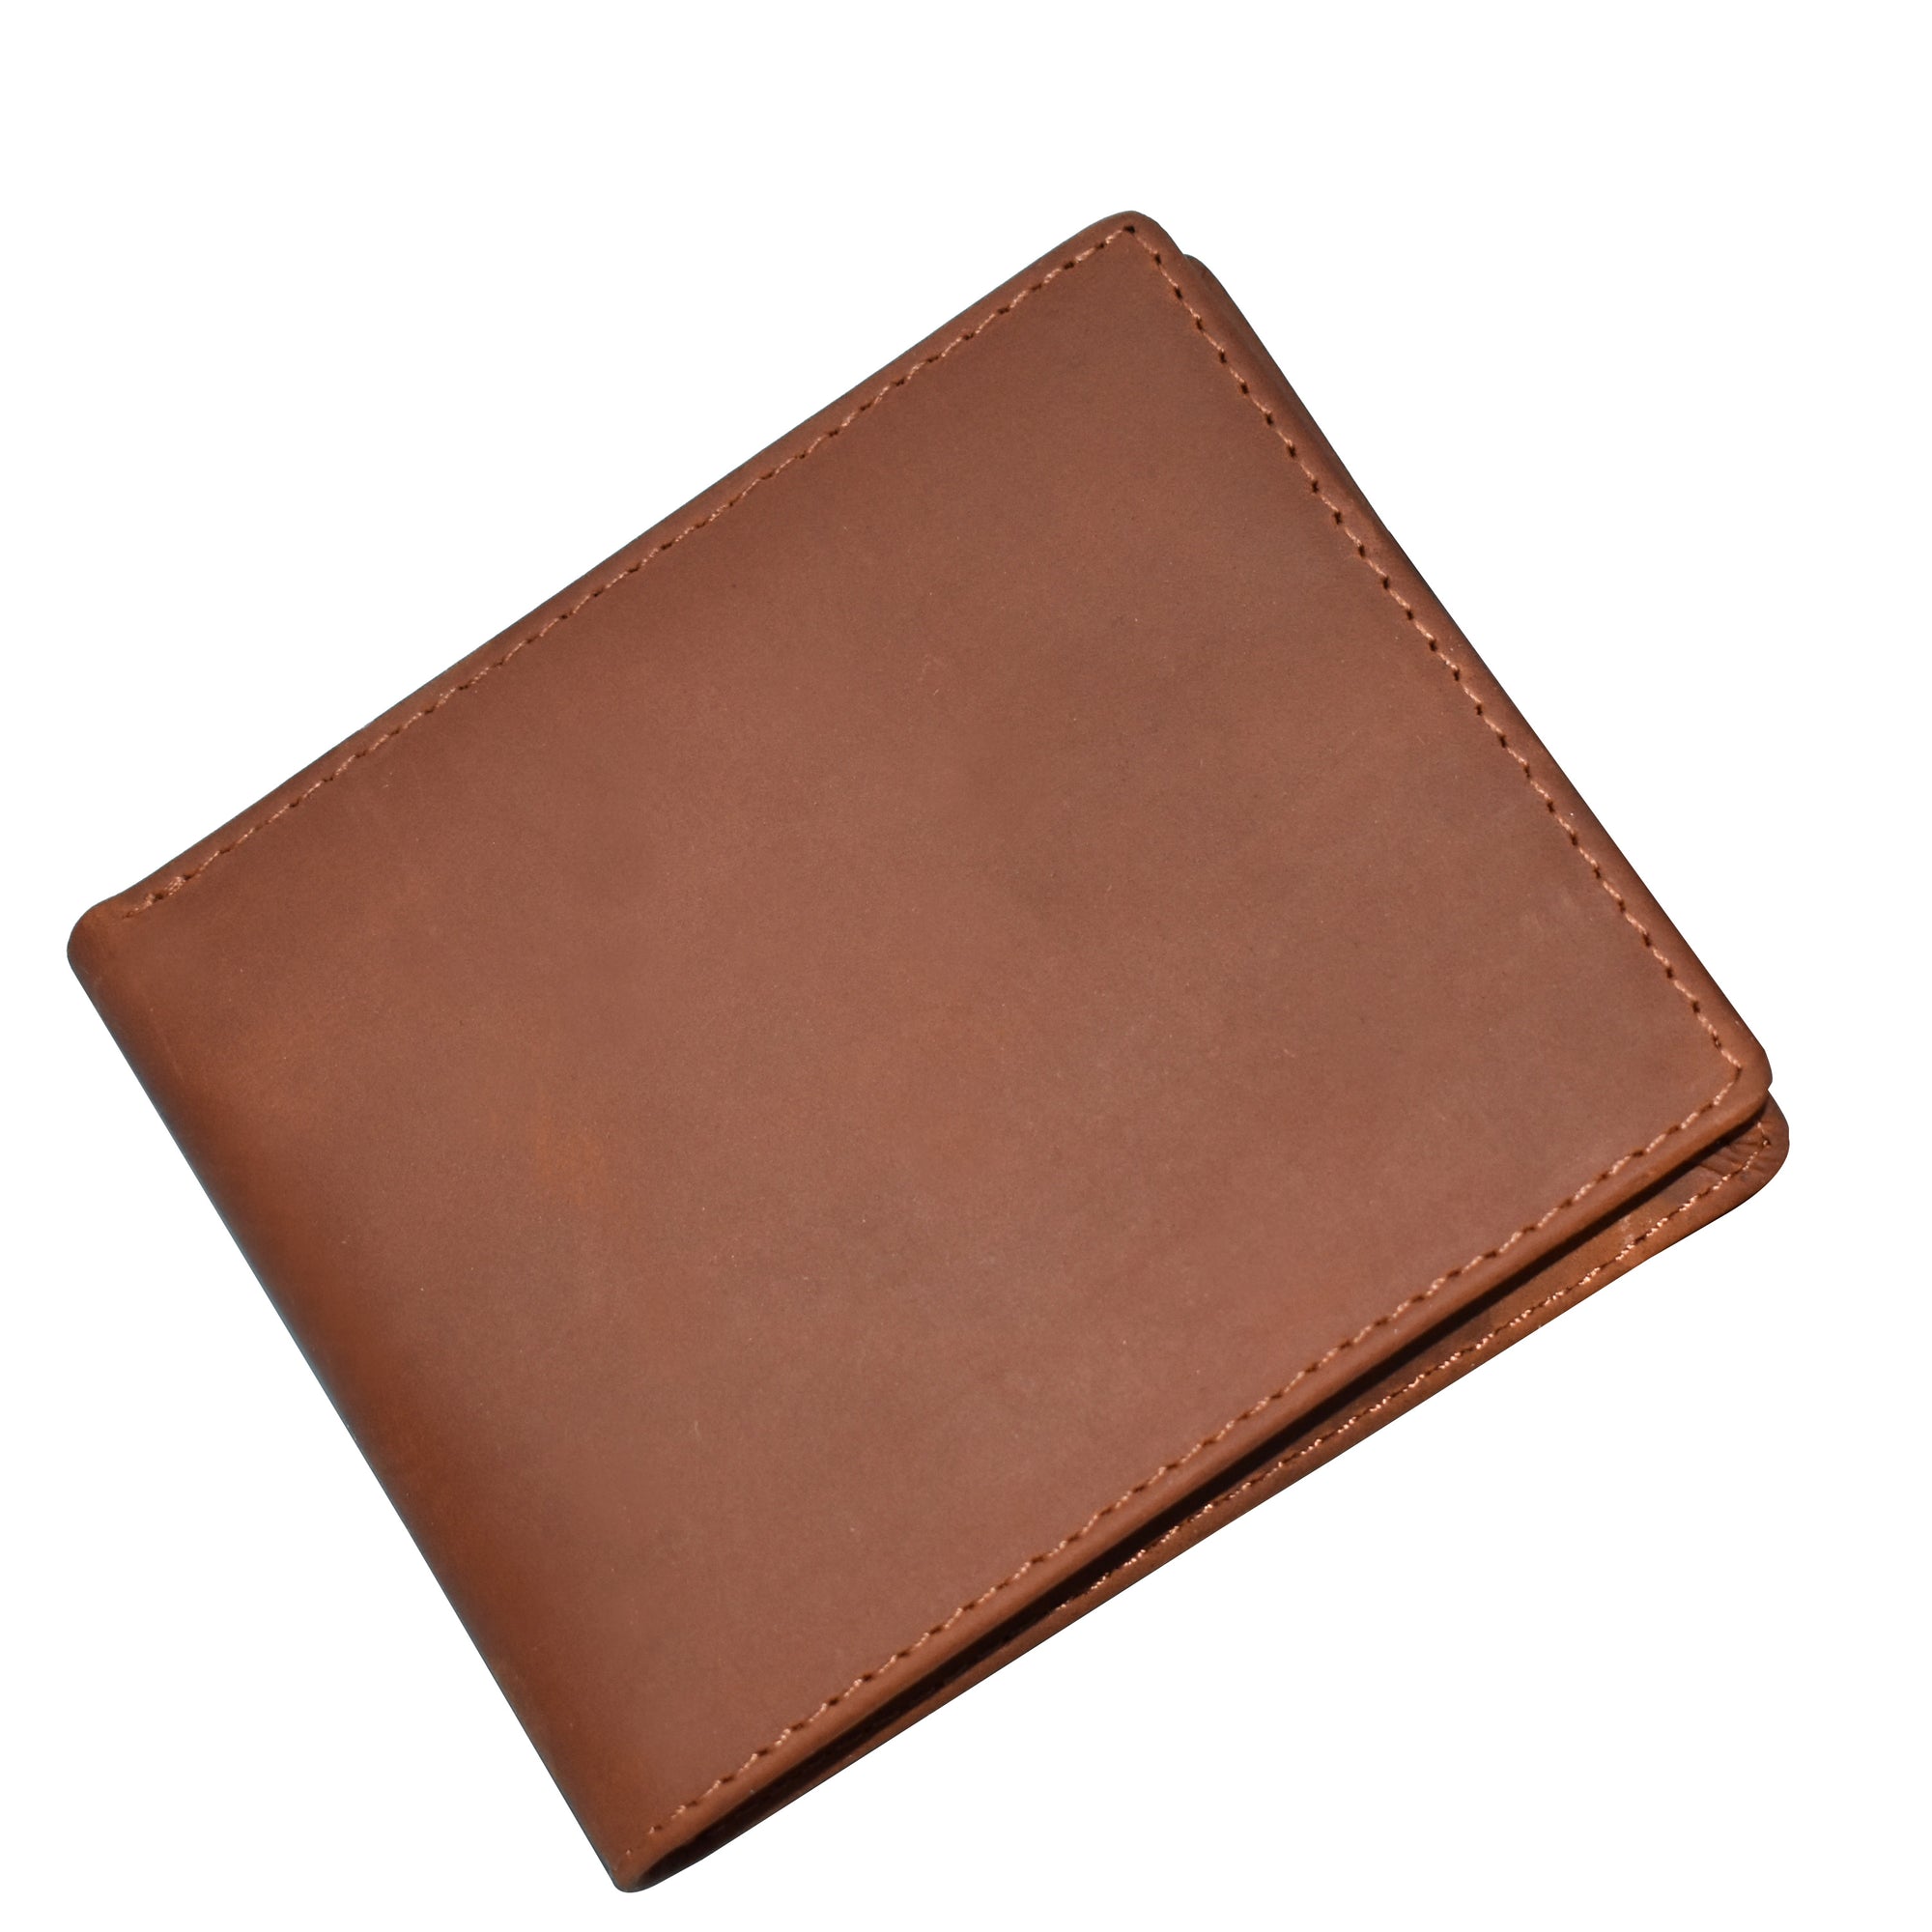 Leather Men's Wallet - Brown